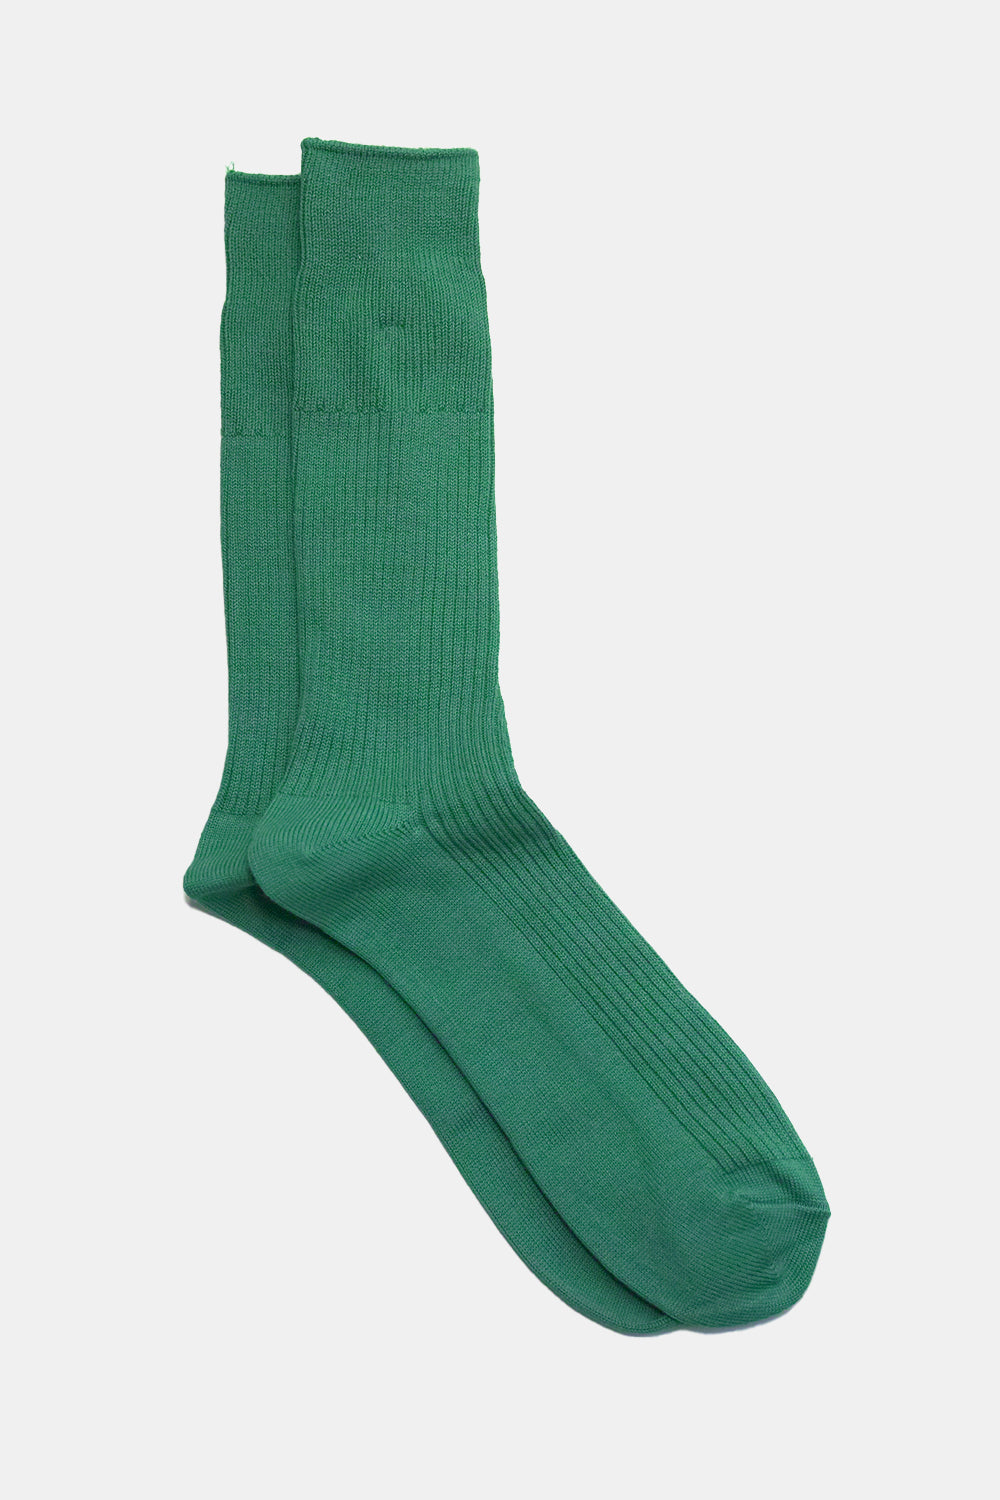 Anonymous Ism Brilliant Crew Socks (Green)